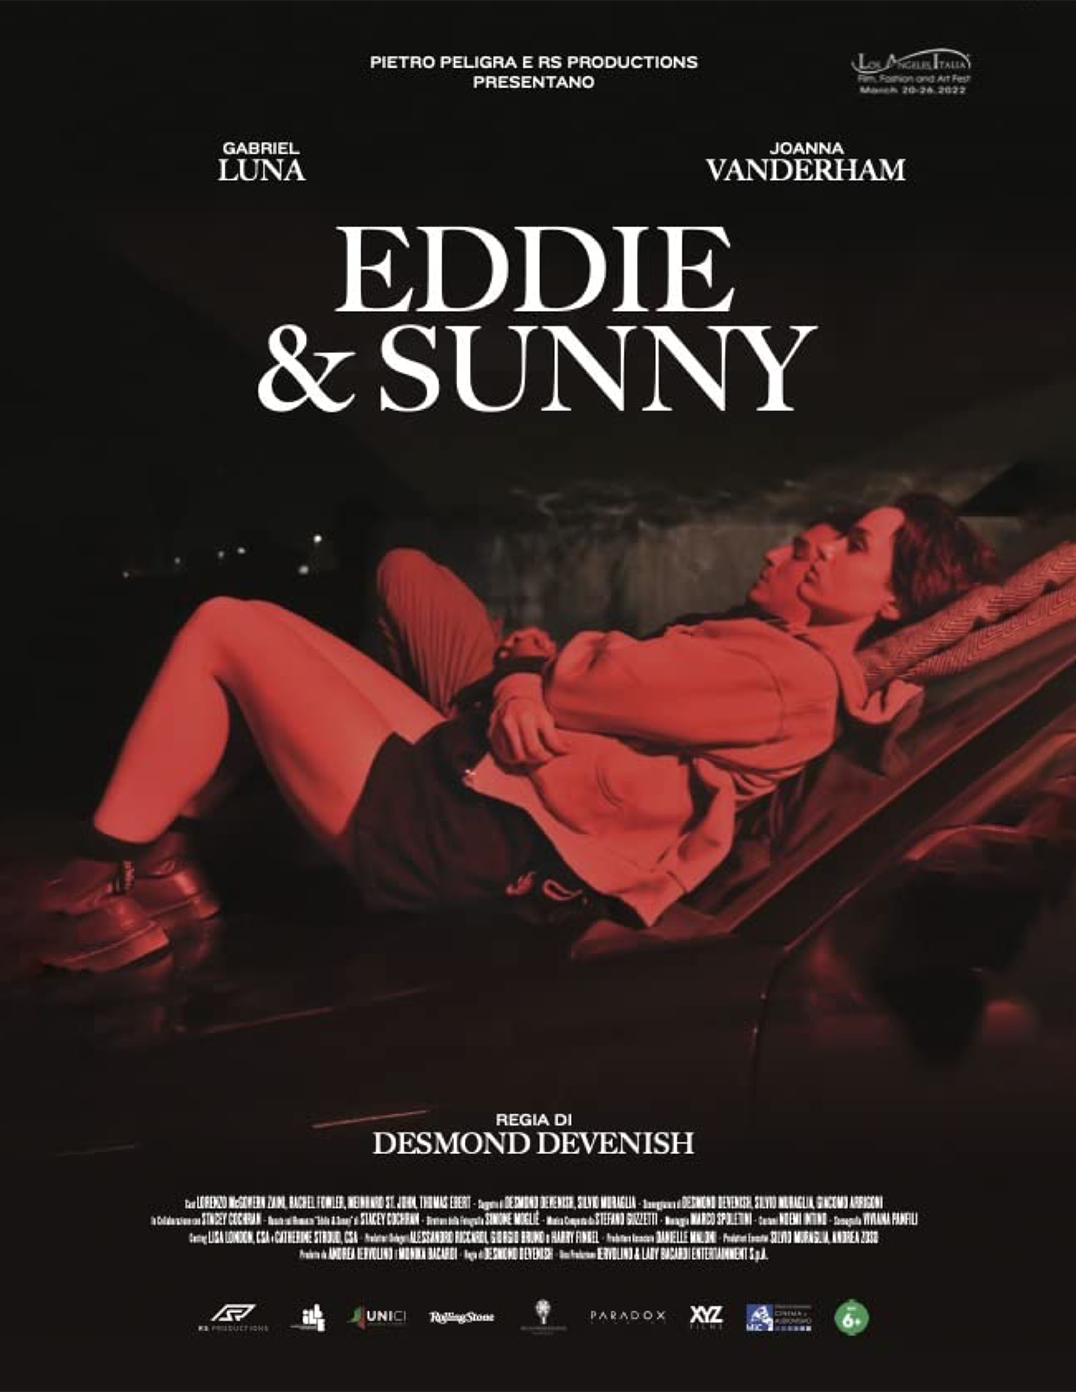 EDDIE & SUNNY